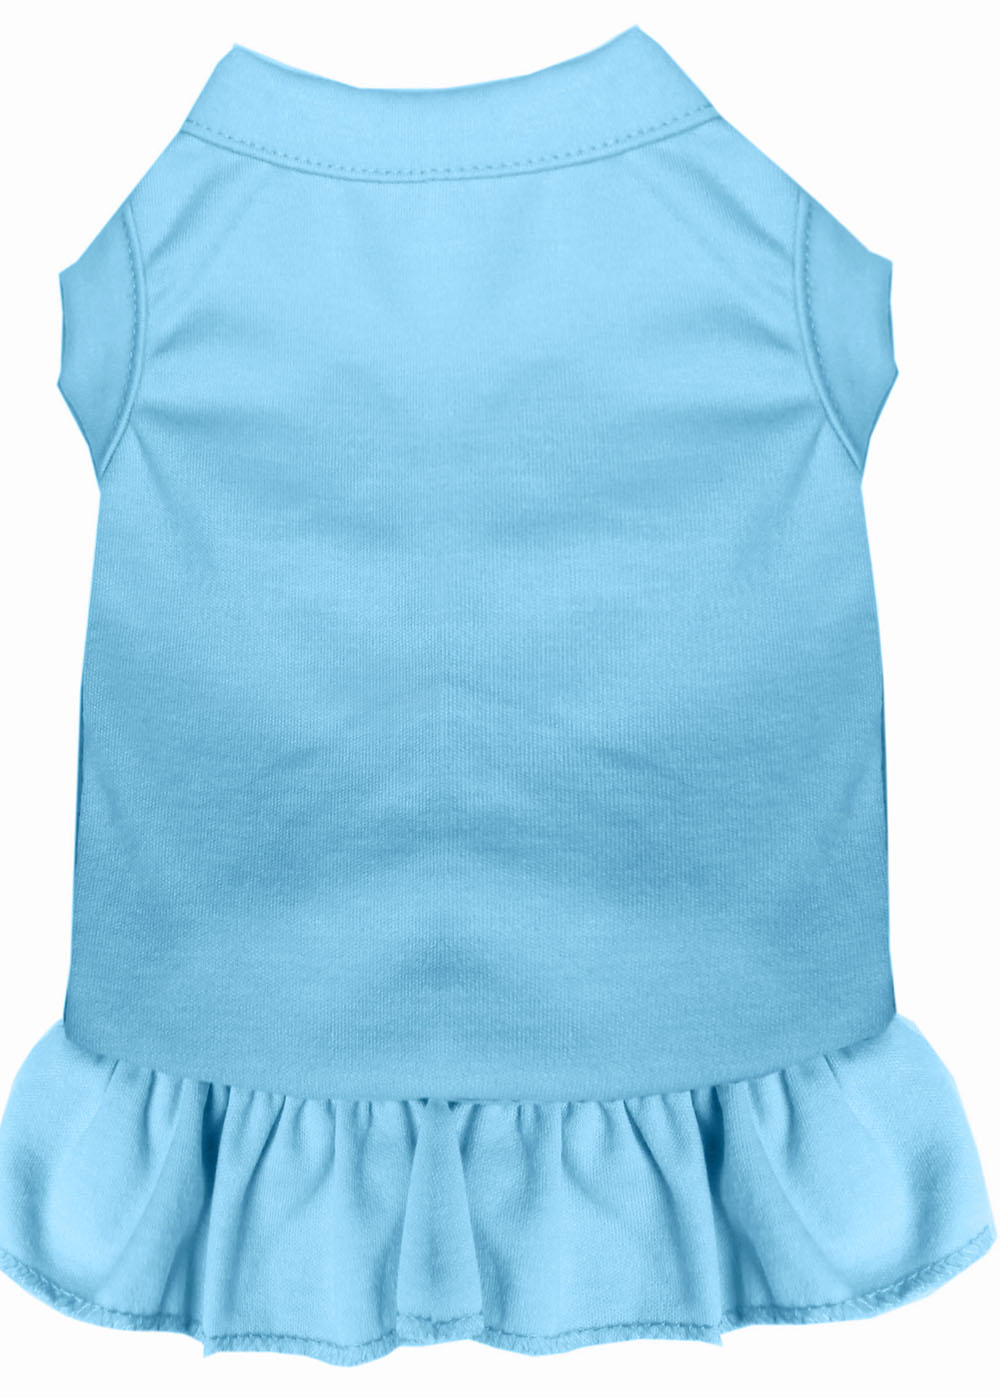 Plain Pet Dress Baby Blue Lg